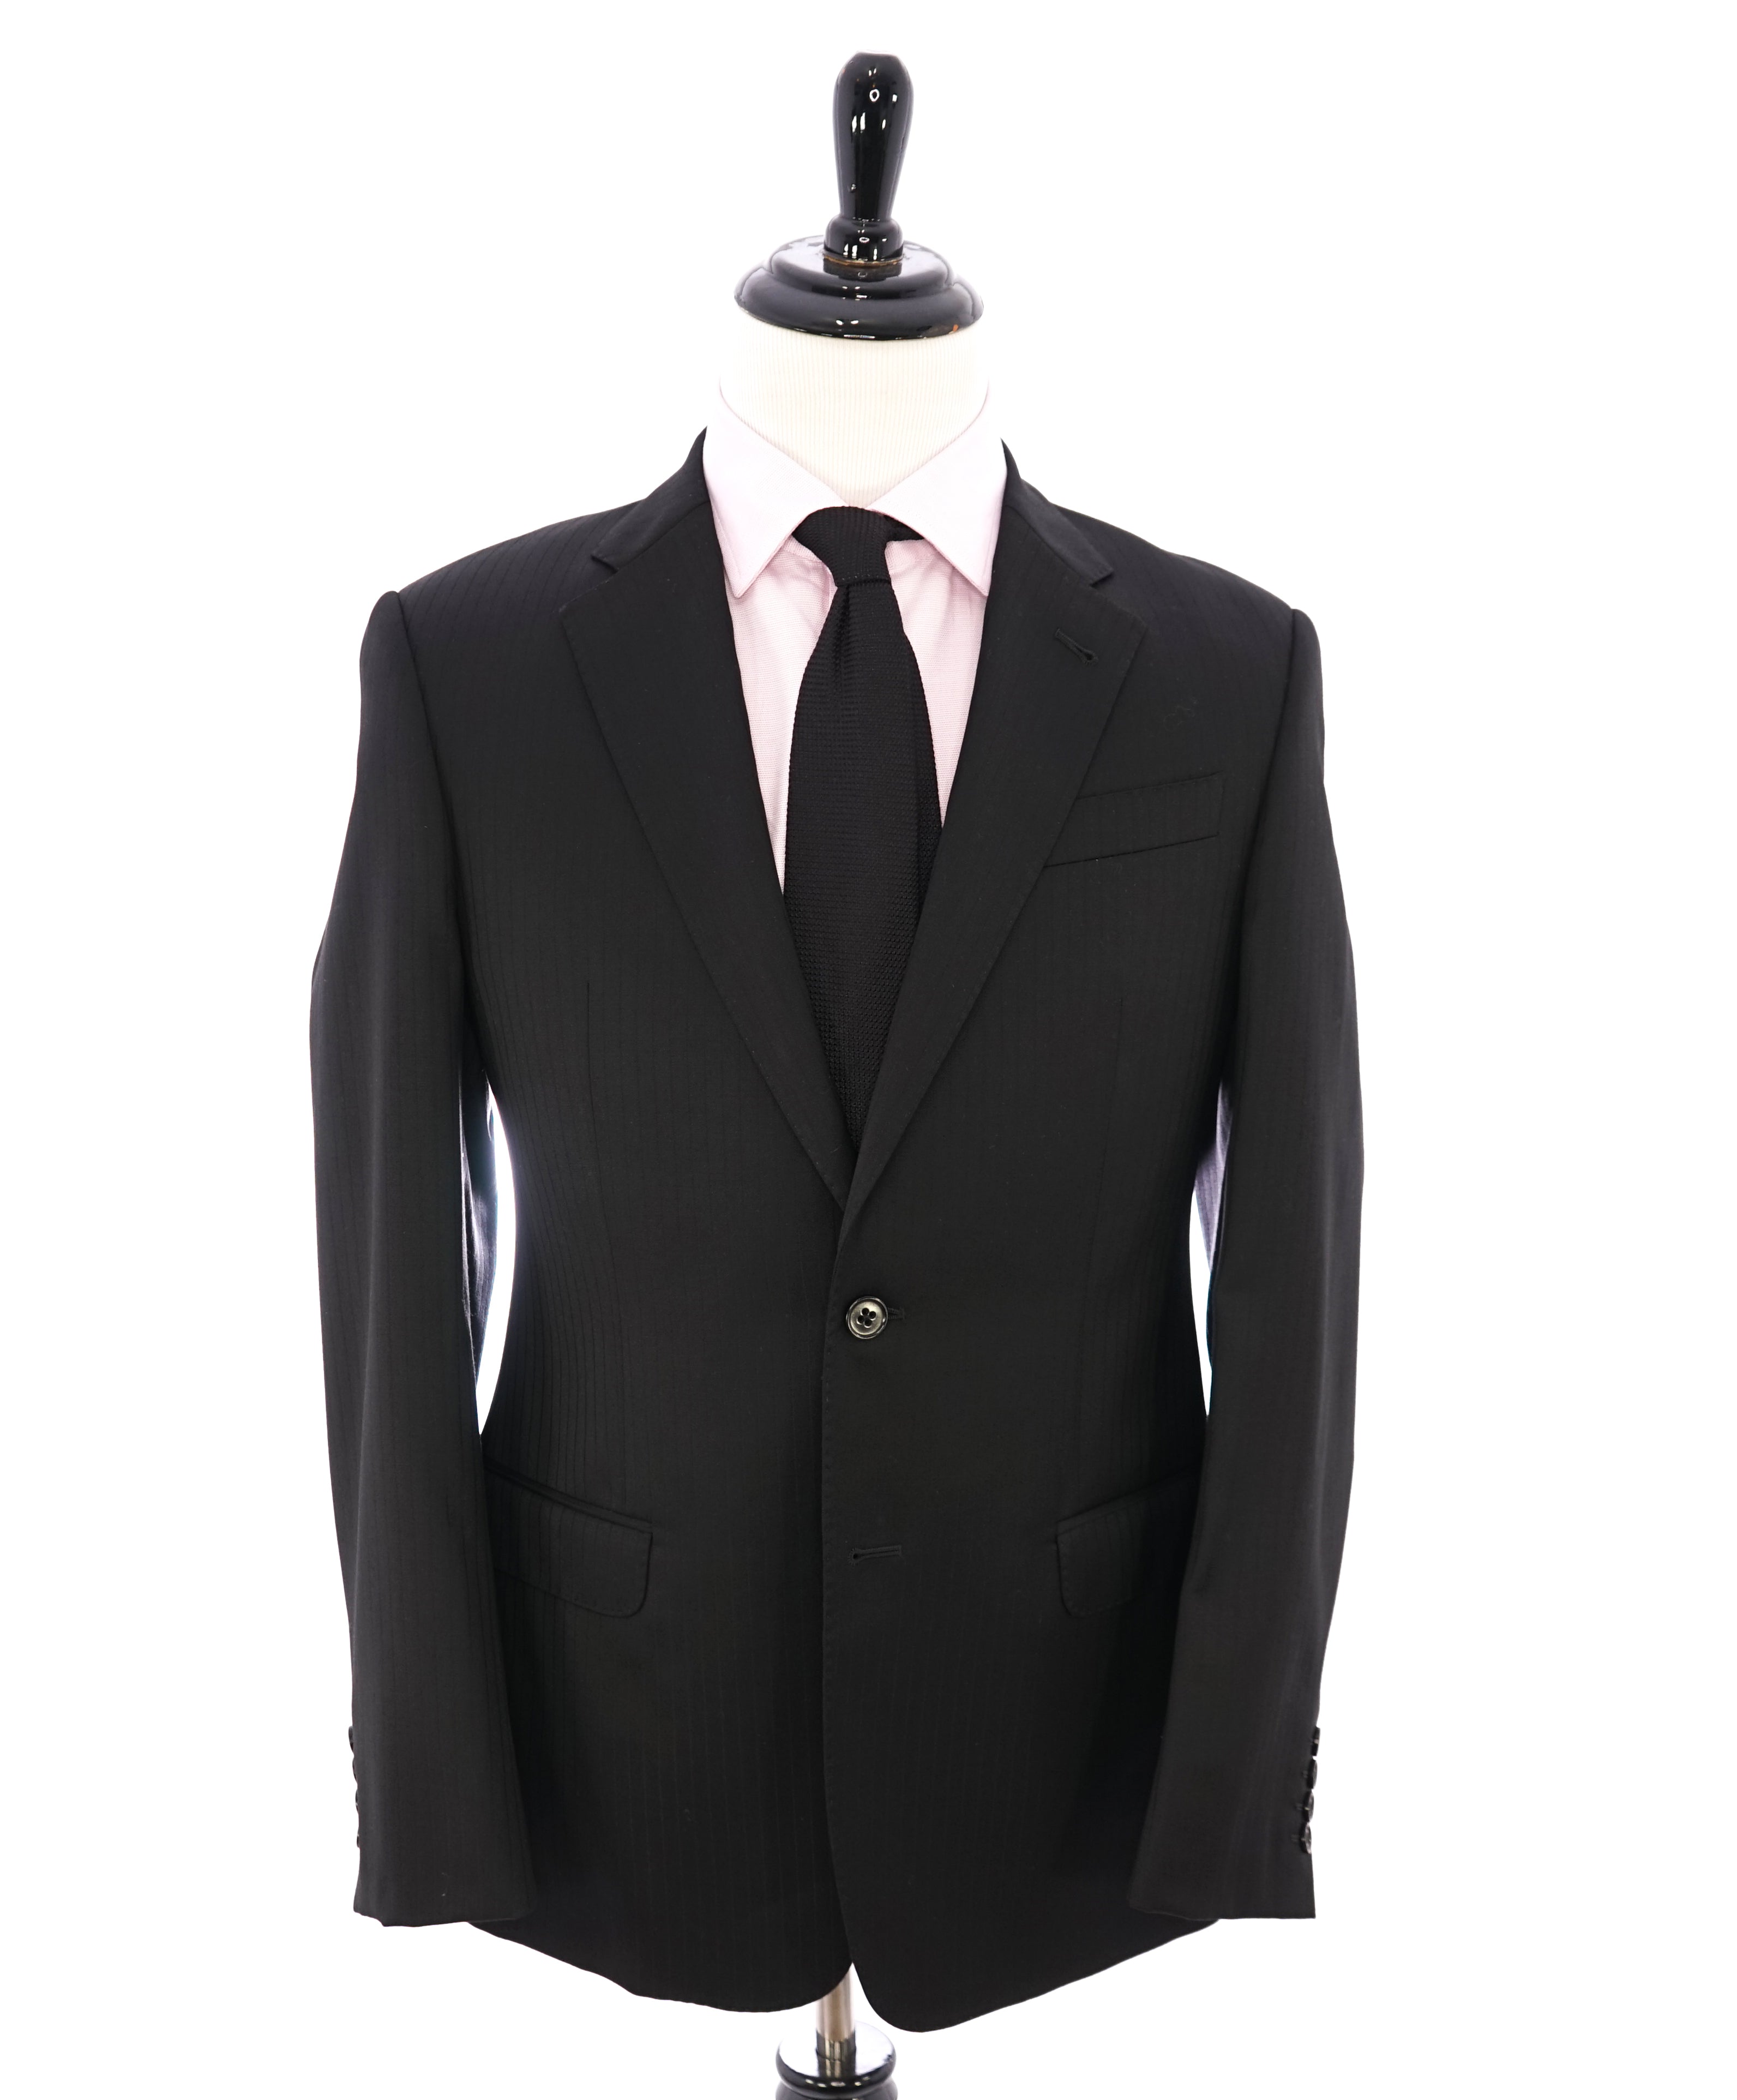 armani collection suit